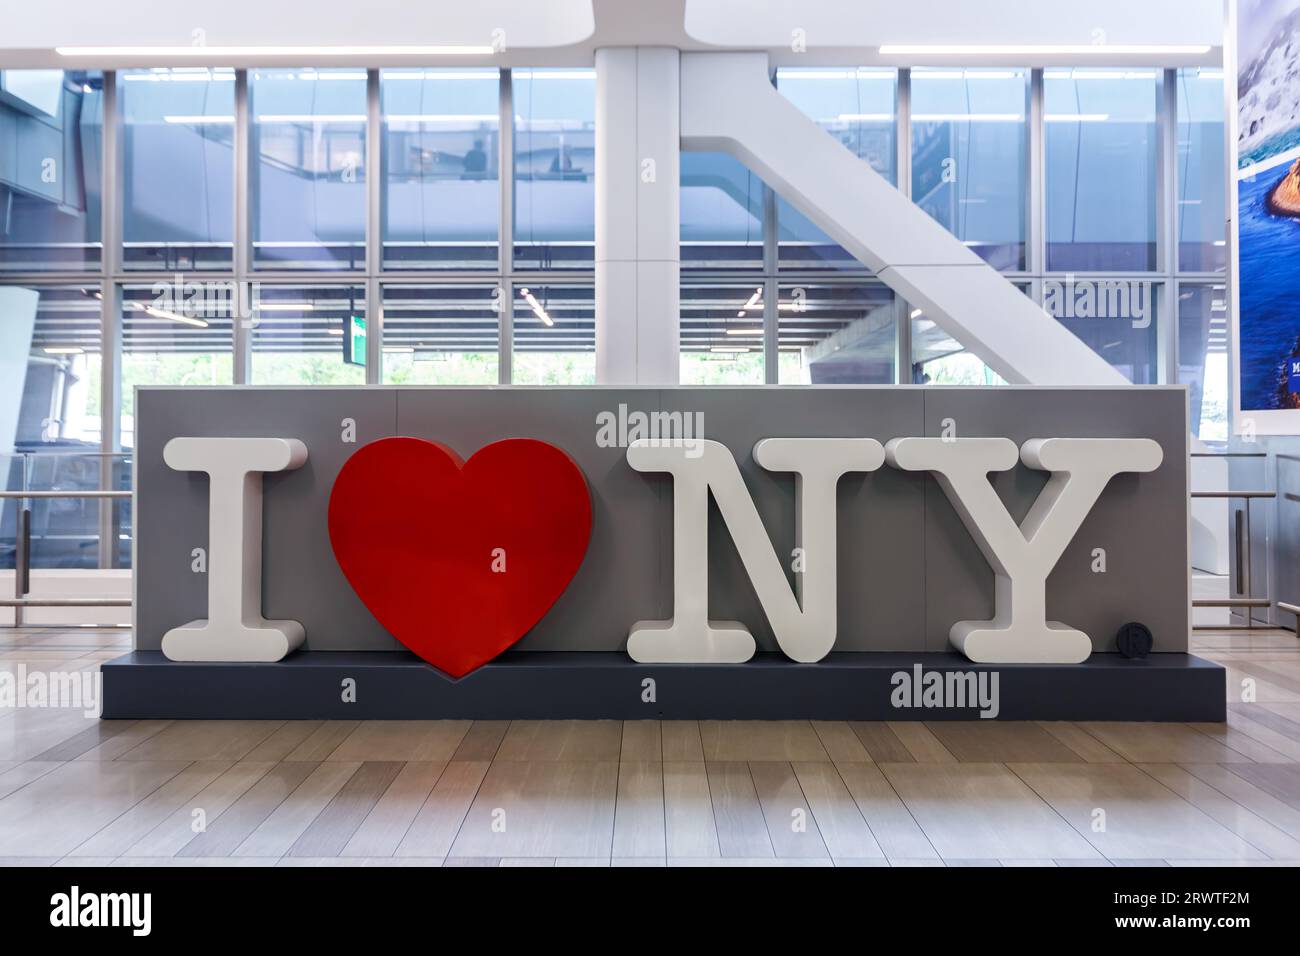 I Love NY heart sign at LaGuardia Airport in New York, United States Stock Photo